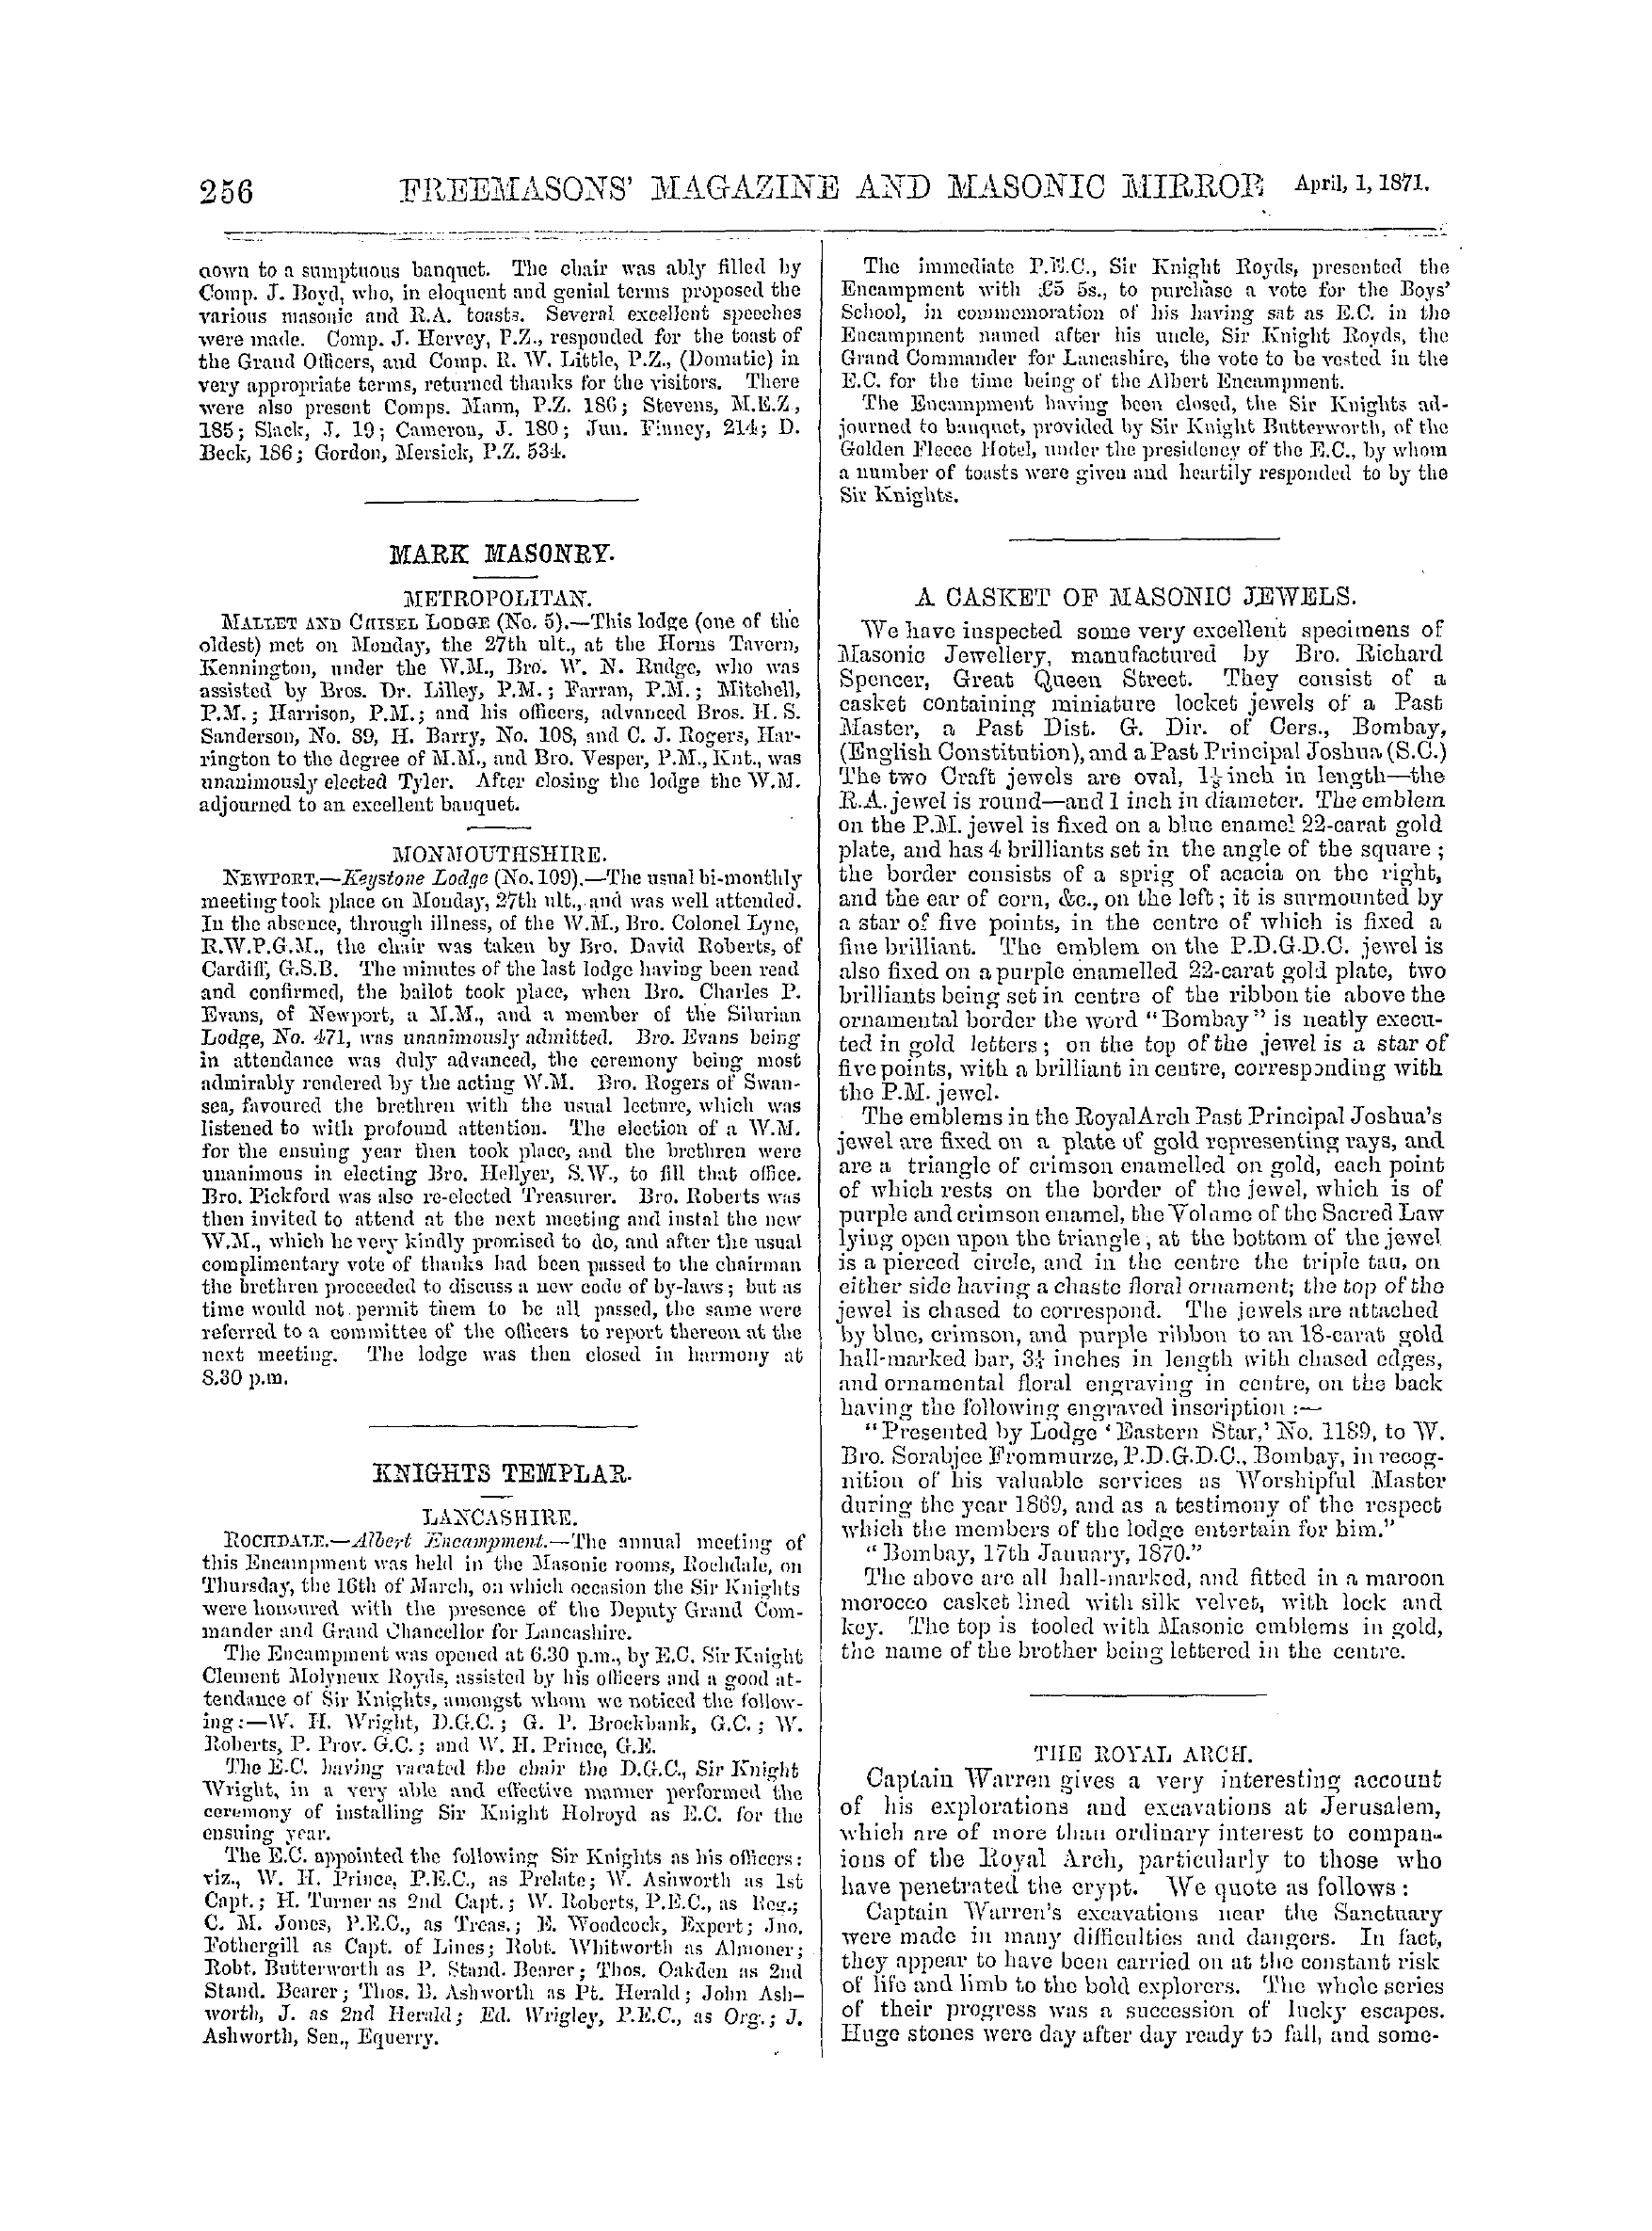 The Freemasons' Monthly Magazine: 1871-04-01 - Royal Arch.